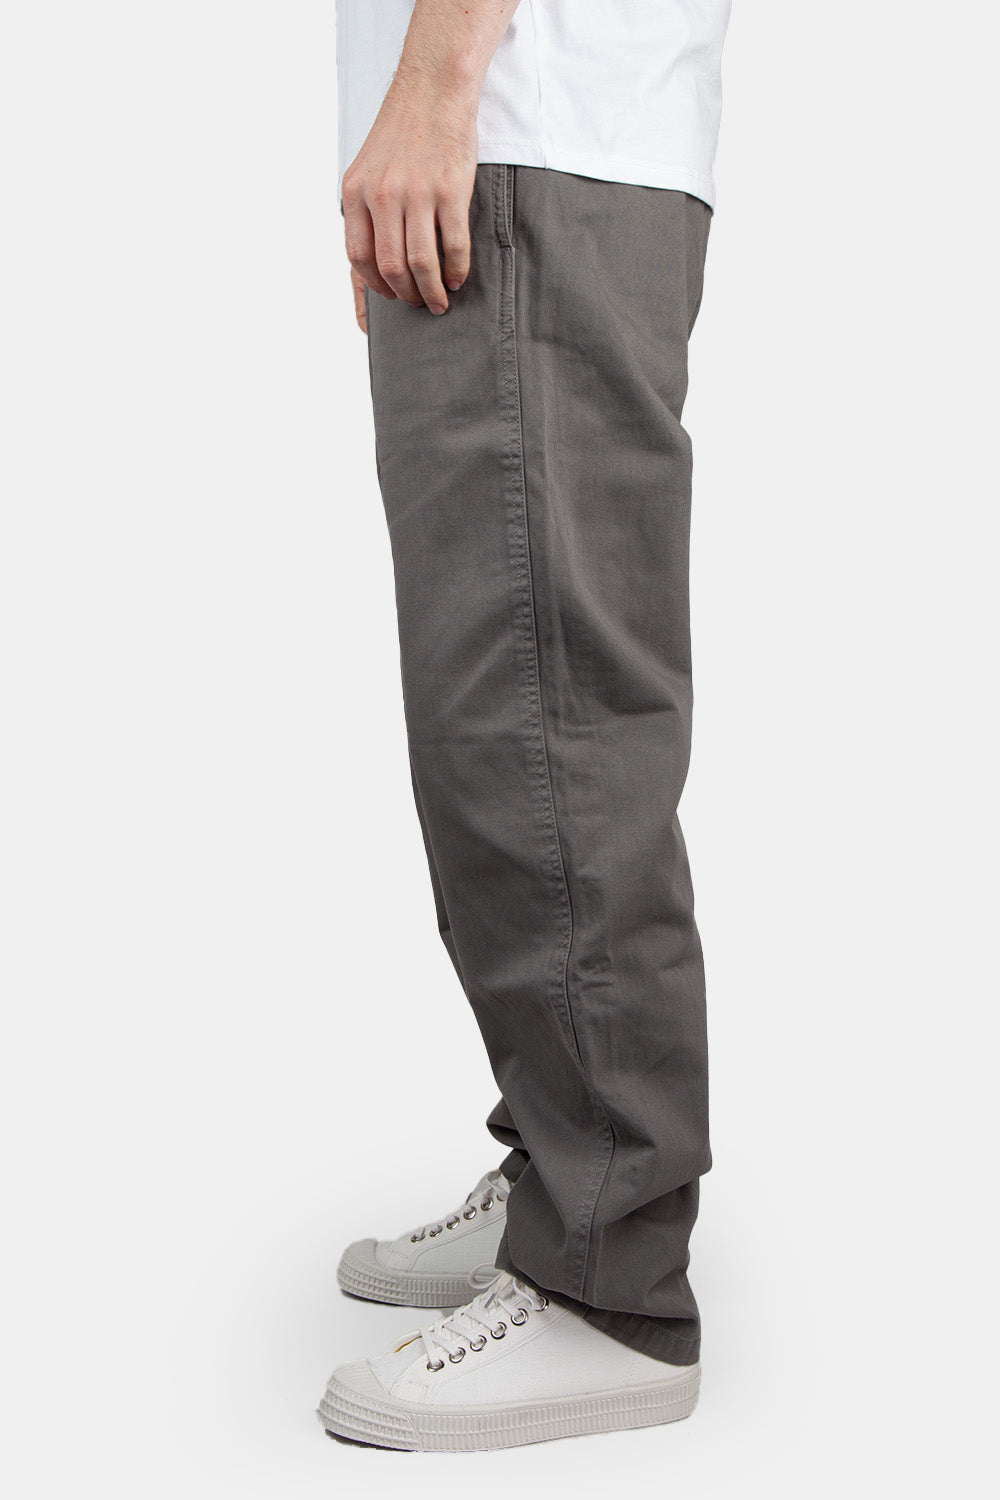 Gramicci G Pants Double-Ringspun Organic Cotton Twill (Charcoal Grey)